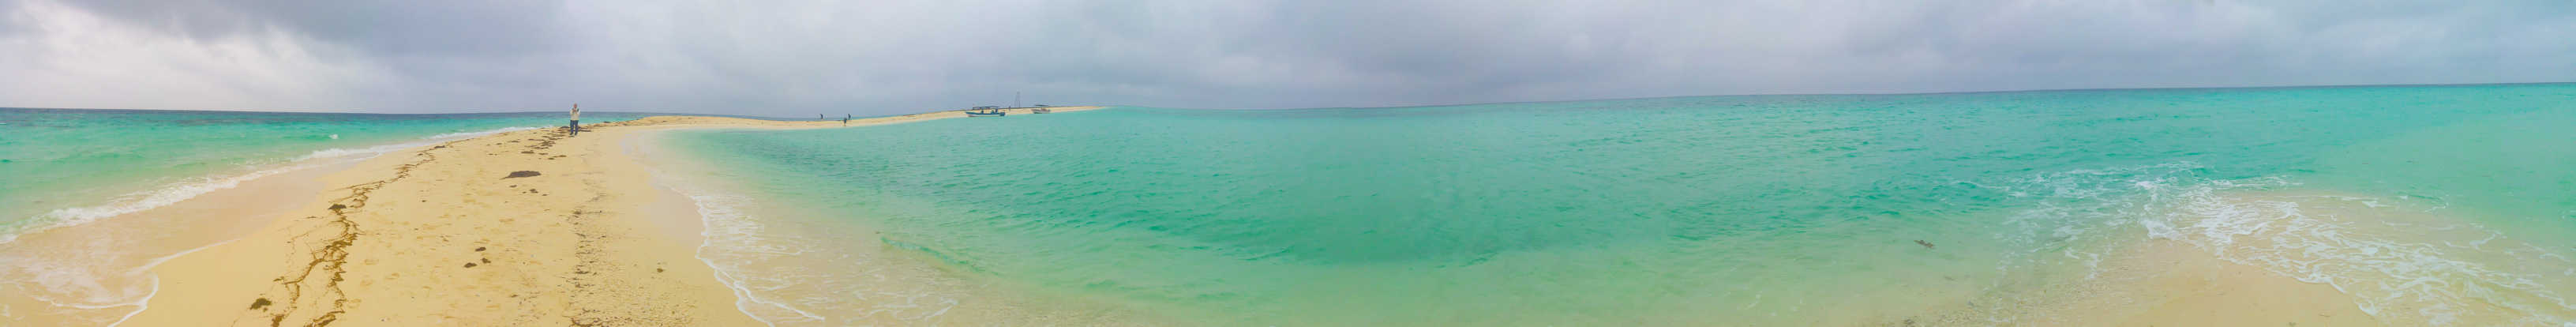 Eritrea beach paradise